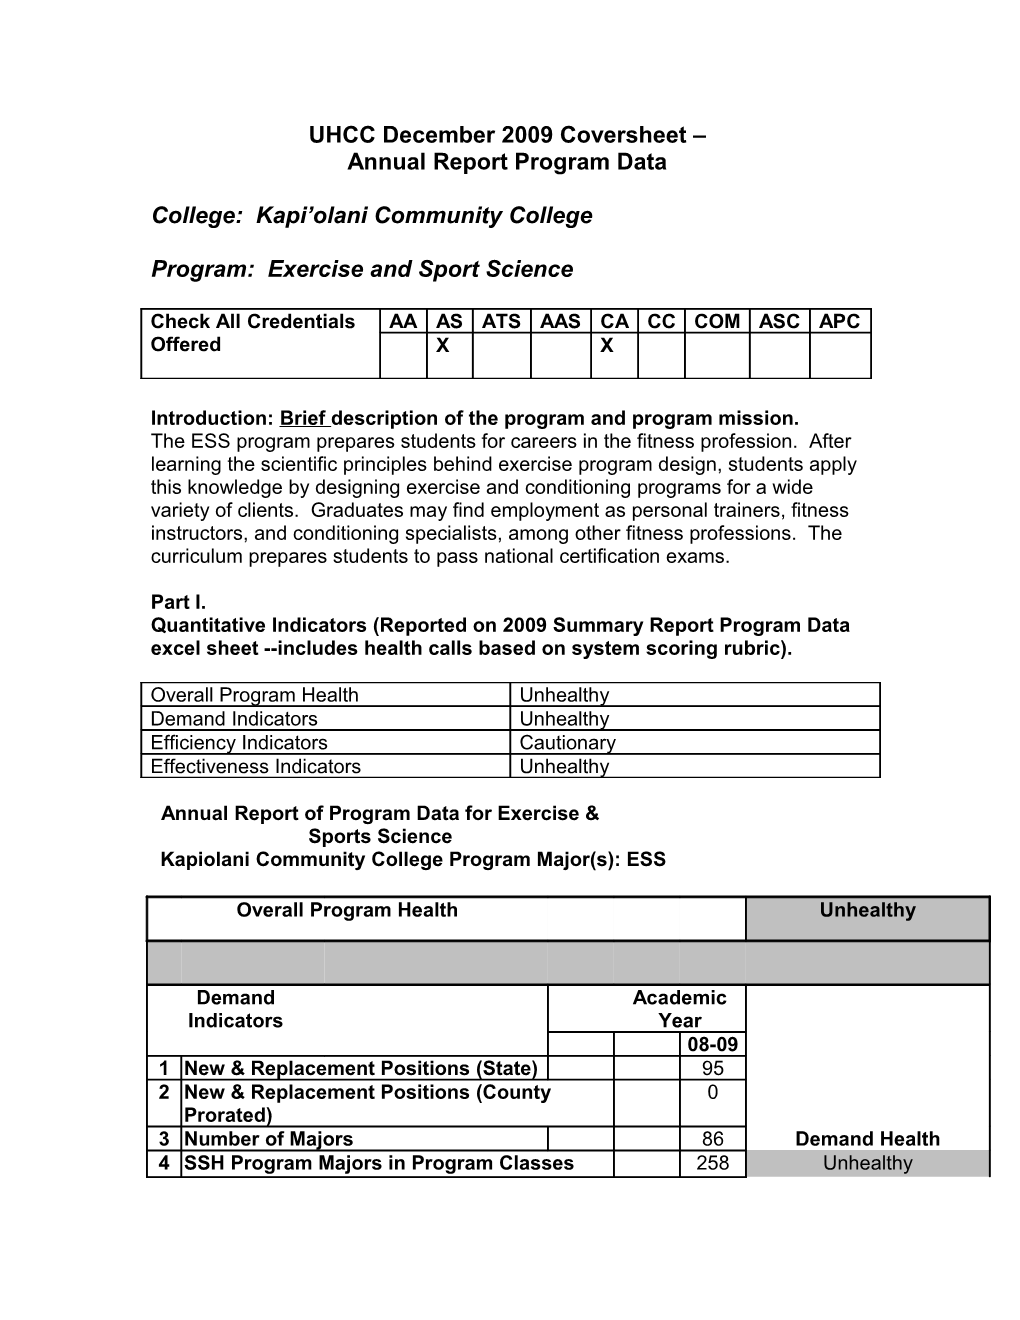 UHCC Annual Report Instructional Program Data on Fall 2006 Data